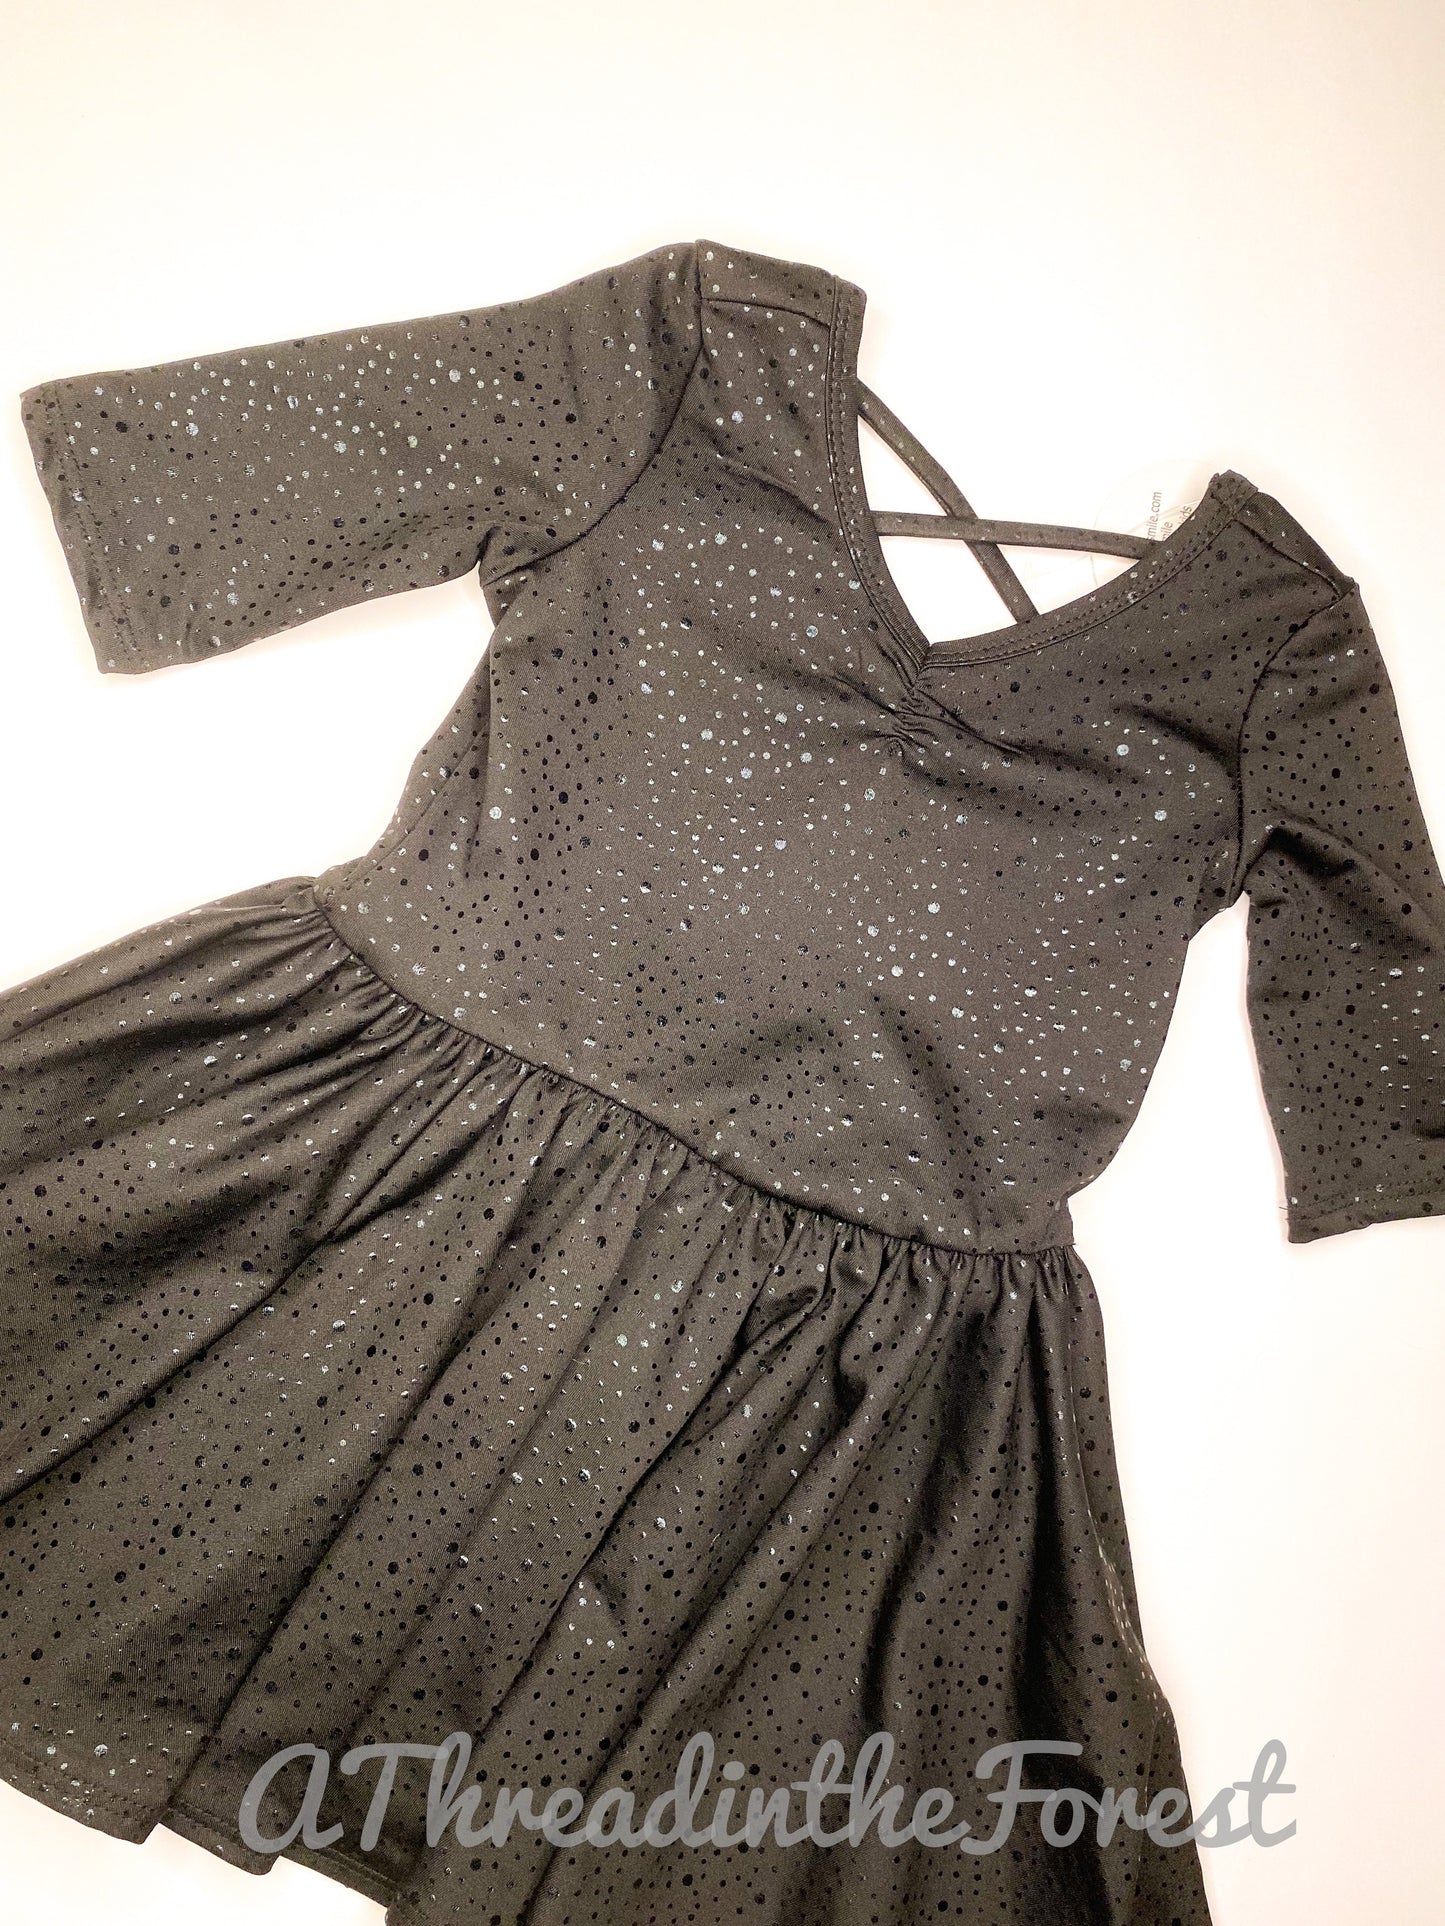 Black with Black dots Dress Size 2T - Fancy Ballerina Style Dress